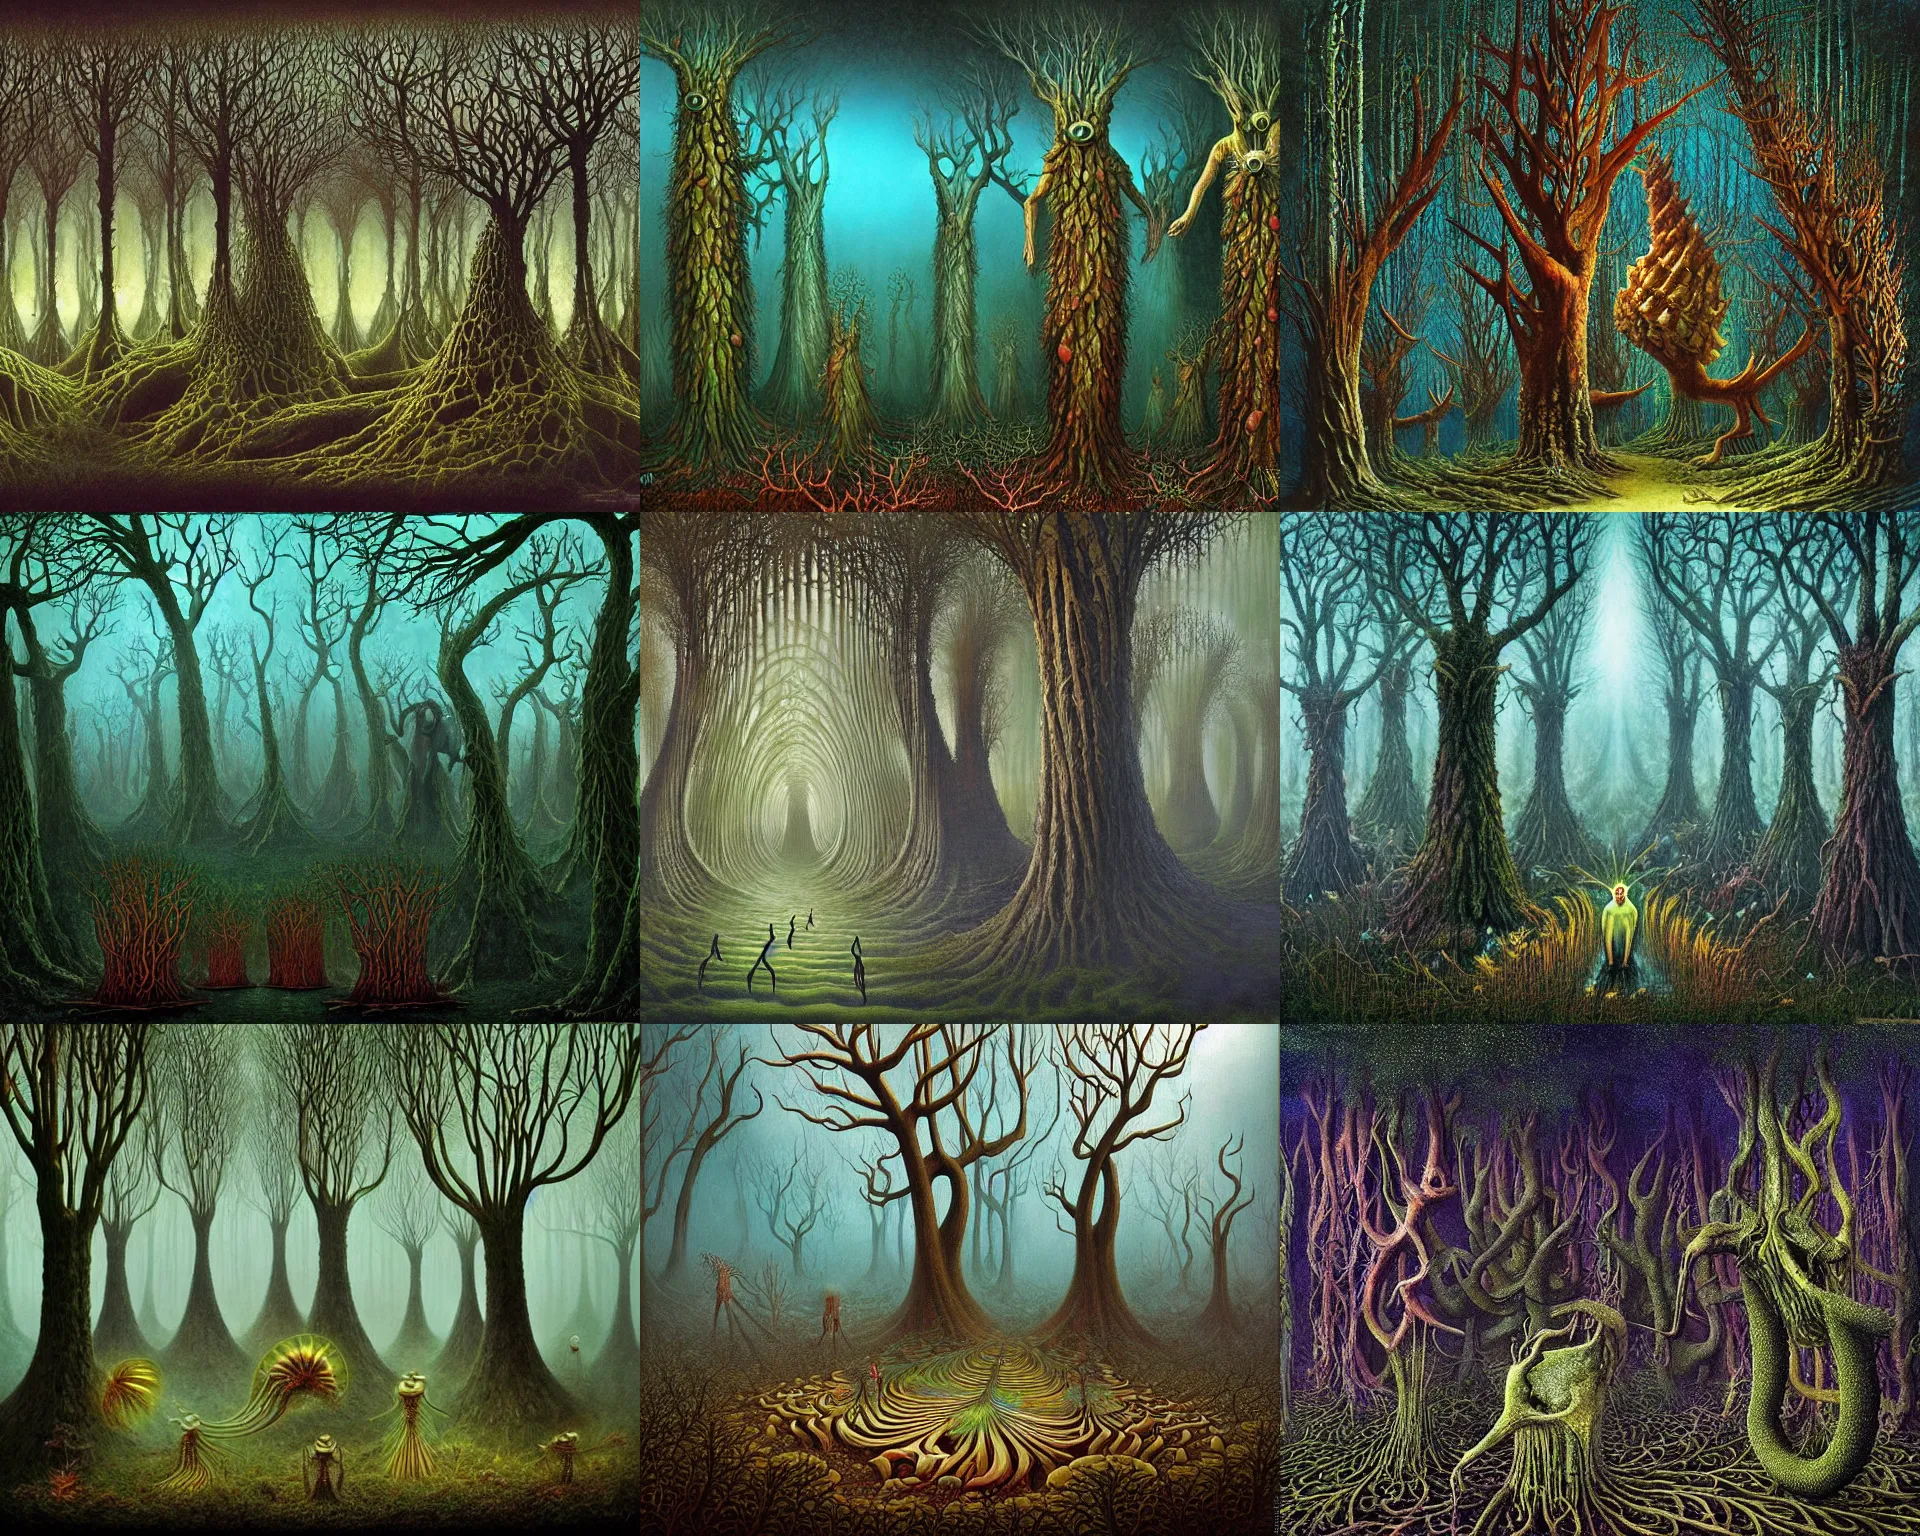 Prompt: underwater fractal acid trip forest, strange creatures walking around, by vladimir kush and giger